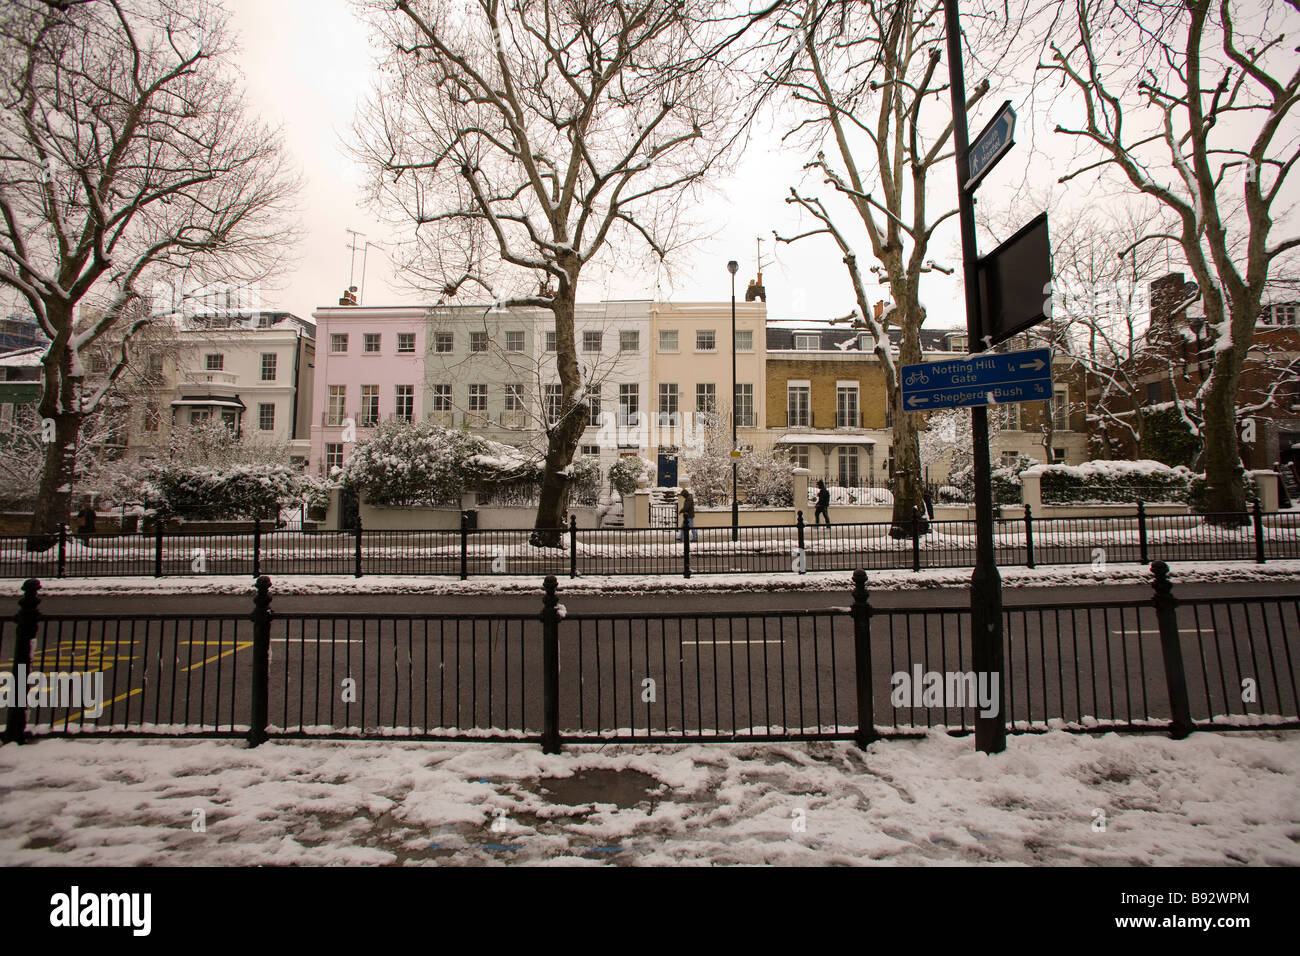 winter scenes kensington london Stock Photo